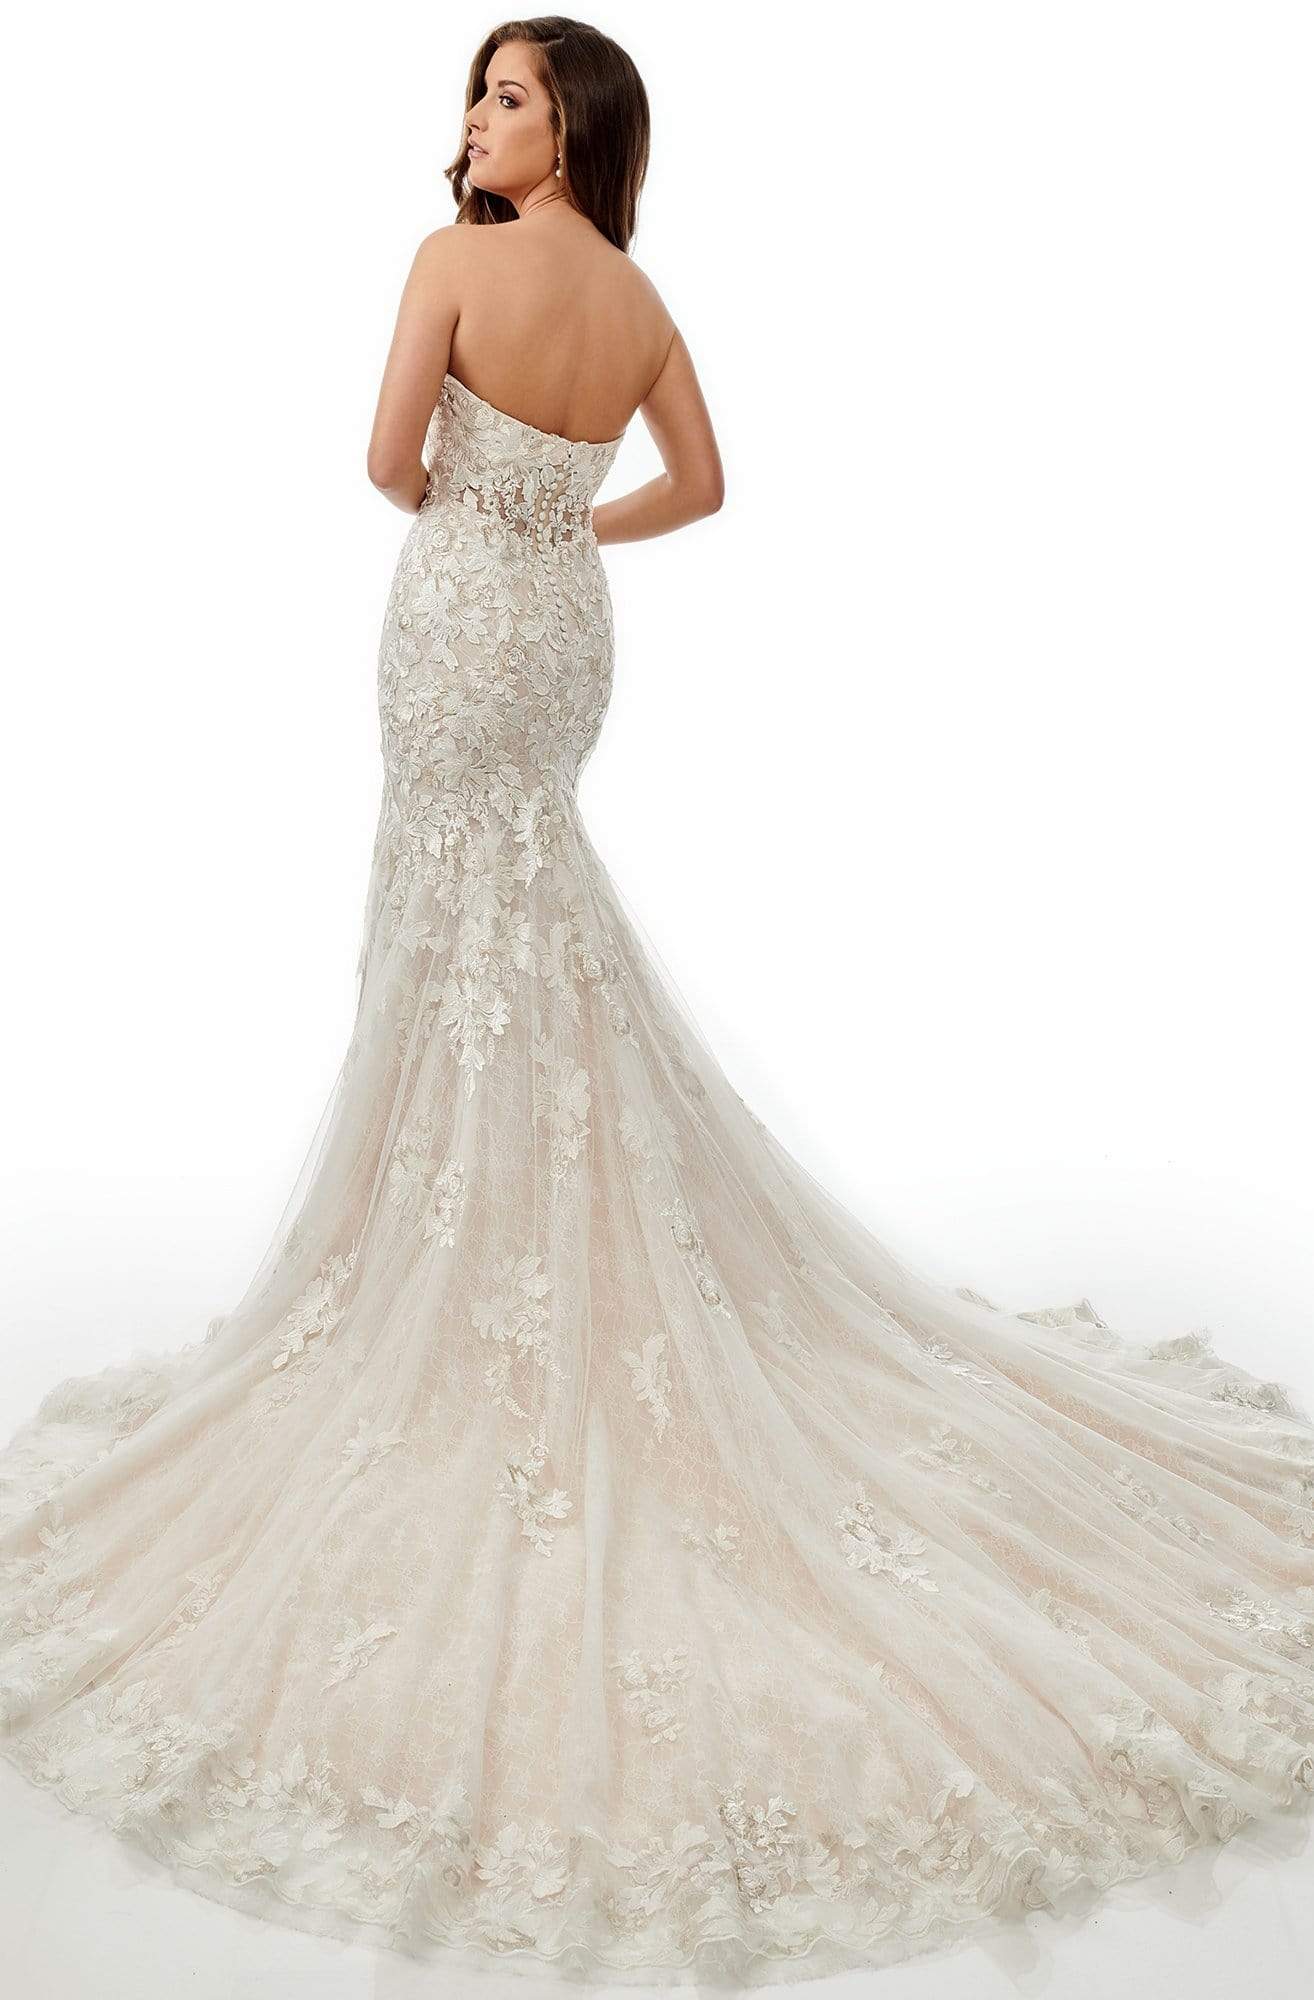 Lo'Adoro Bridal By Rachel Allan - M757 Lace Applique Mermaid Gown Wedding Dresses